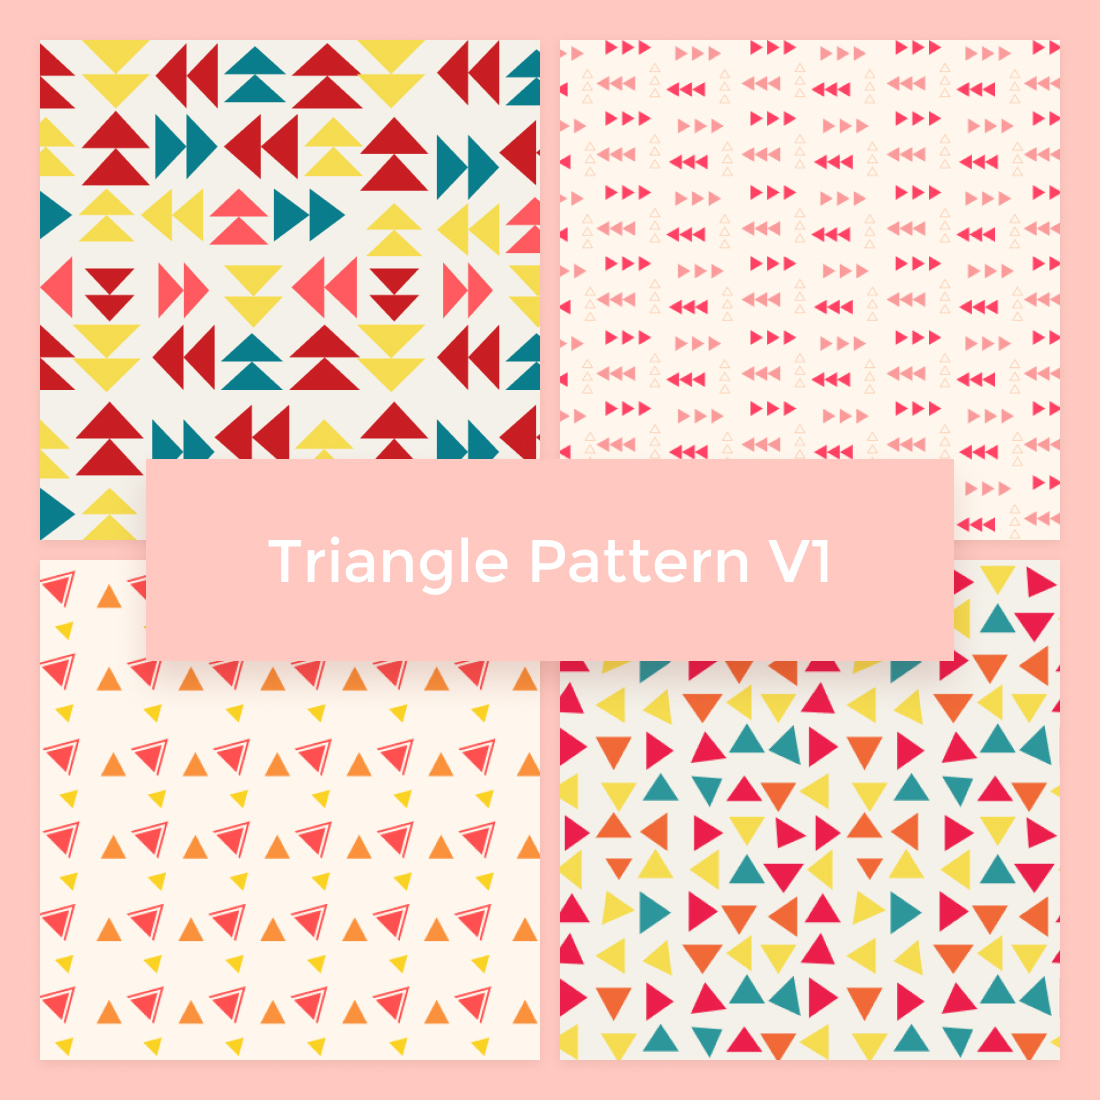 Triangle Pattern V1.